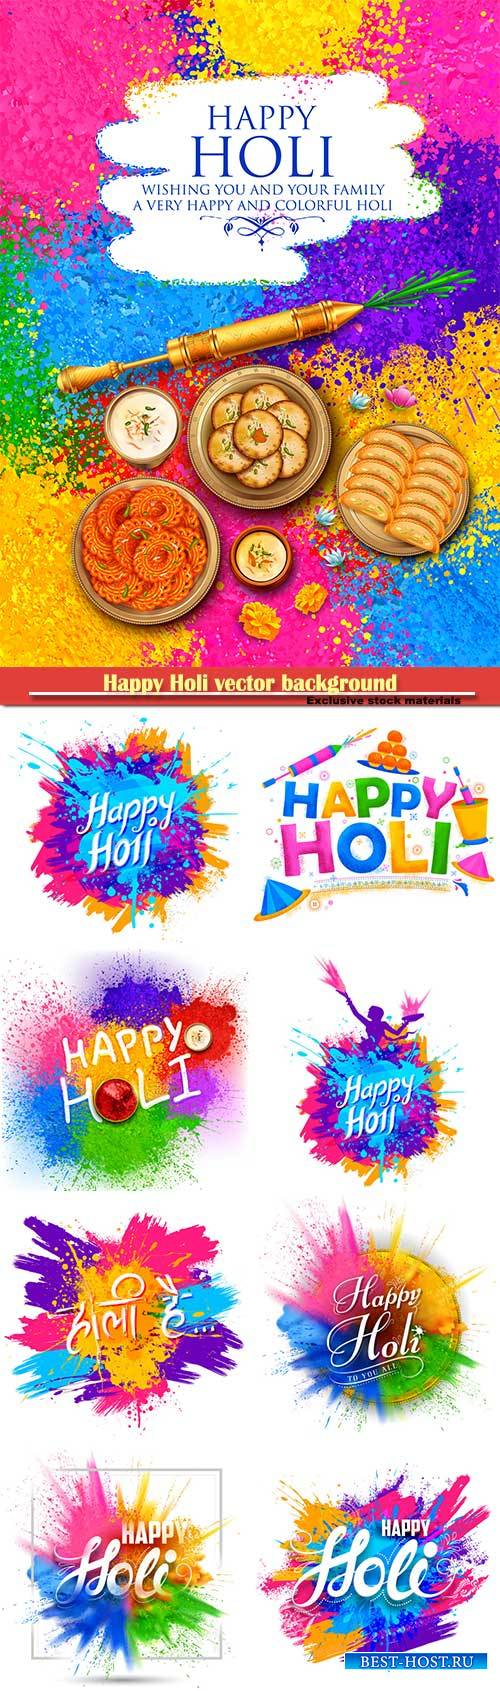 Happy Holi vector background, festival of India celebration greetings card